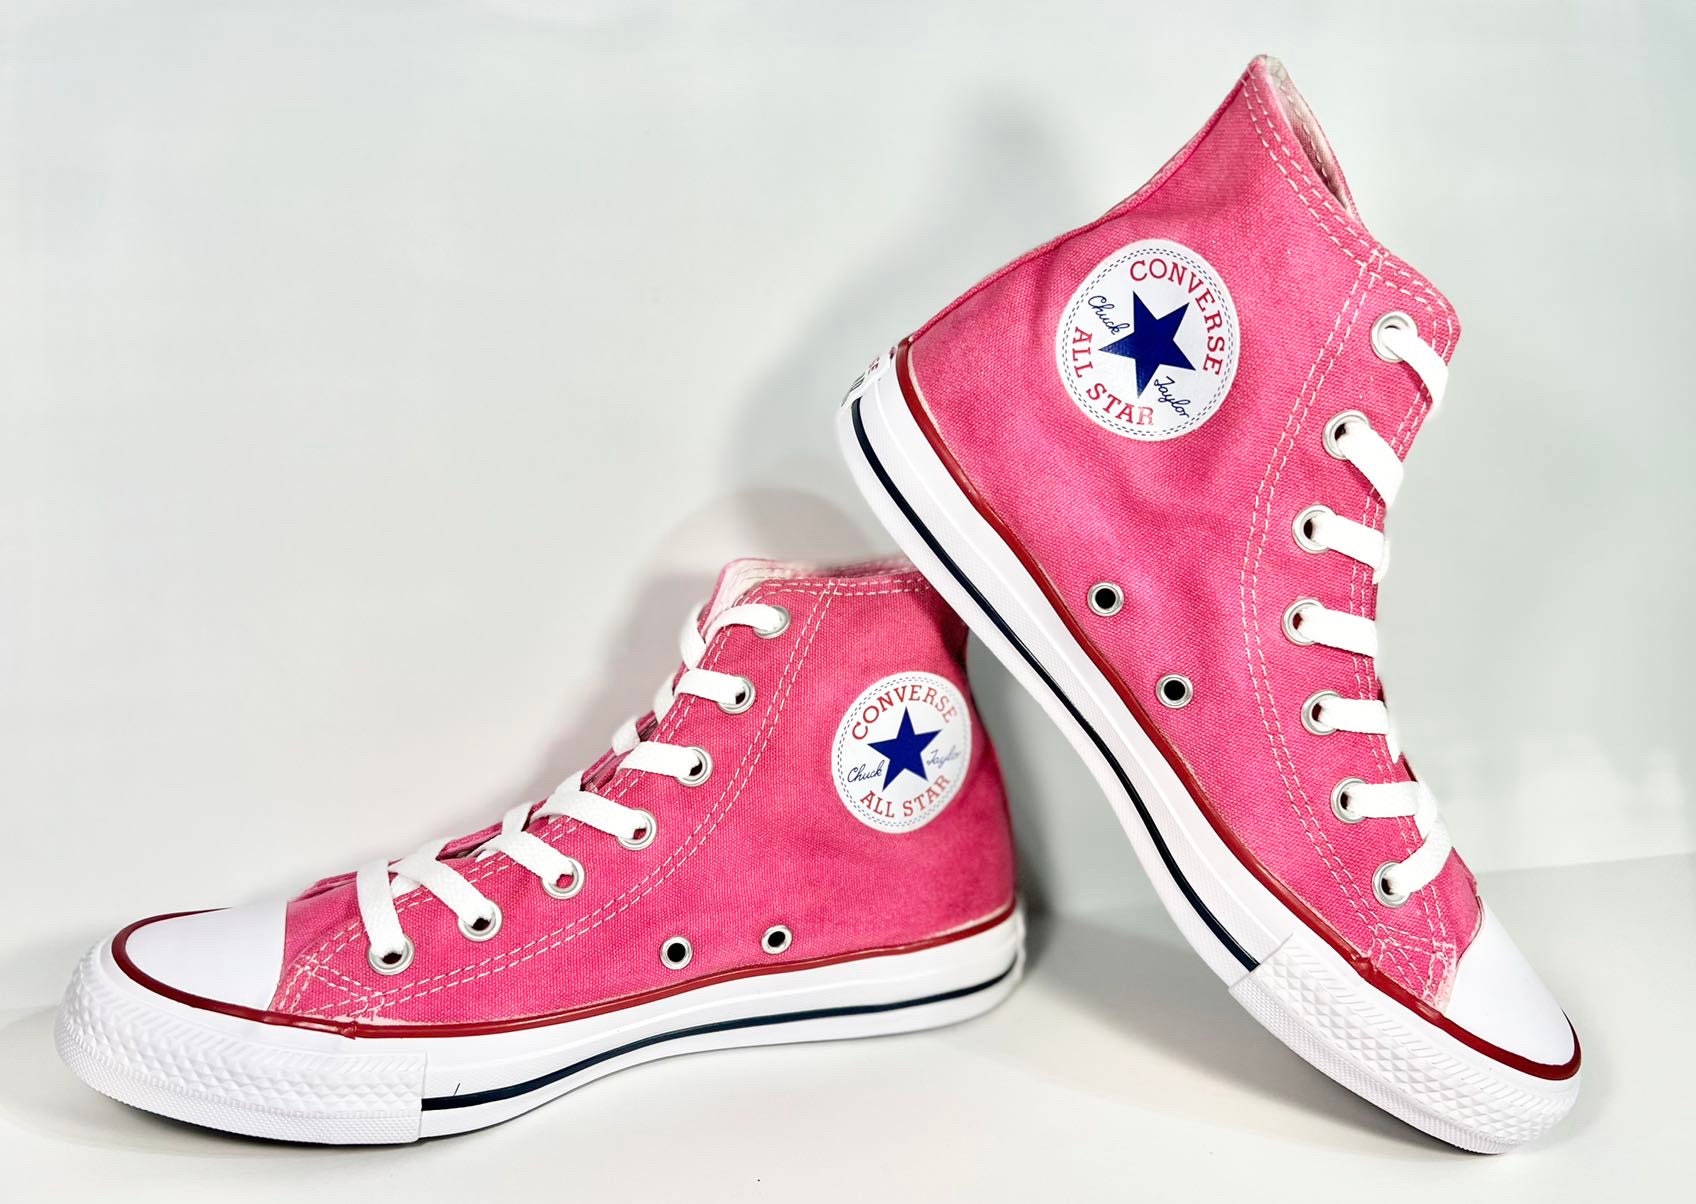 bekendtskab synonymordbog føderation Custom Dyed Hot Pink Converse All Star High Tops Shoes - Etsy